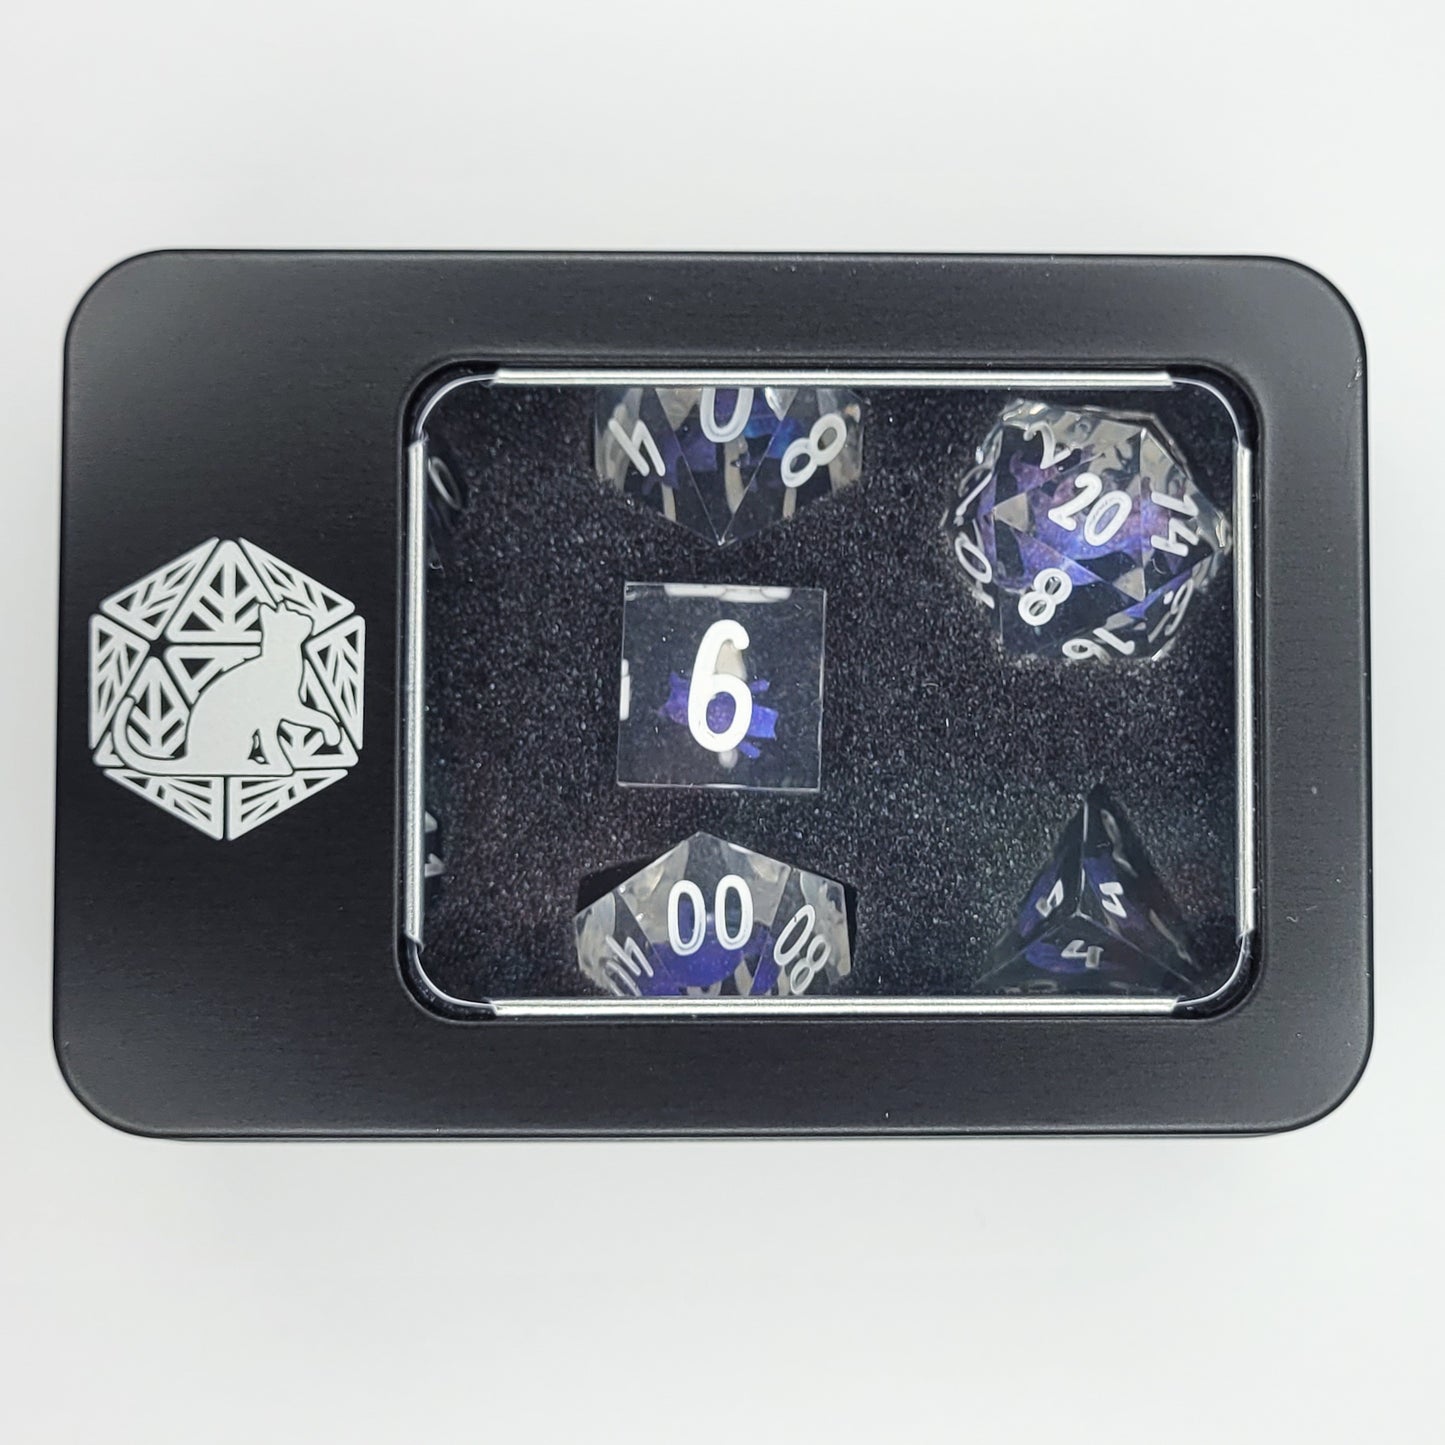 Purryhedrals Black Cat sharp-edge dice